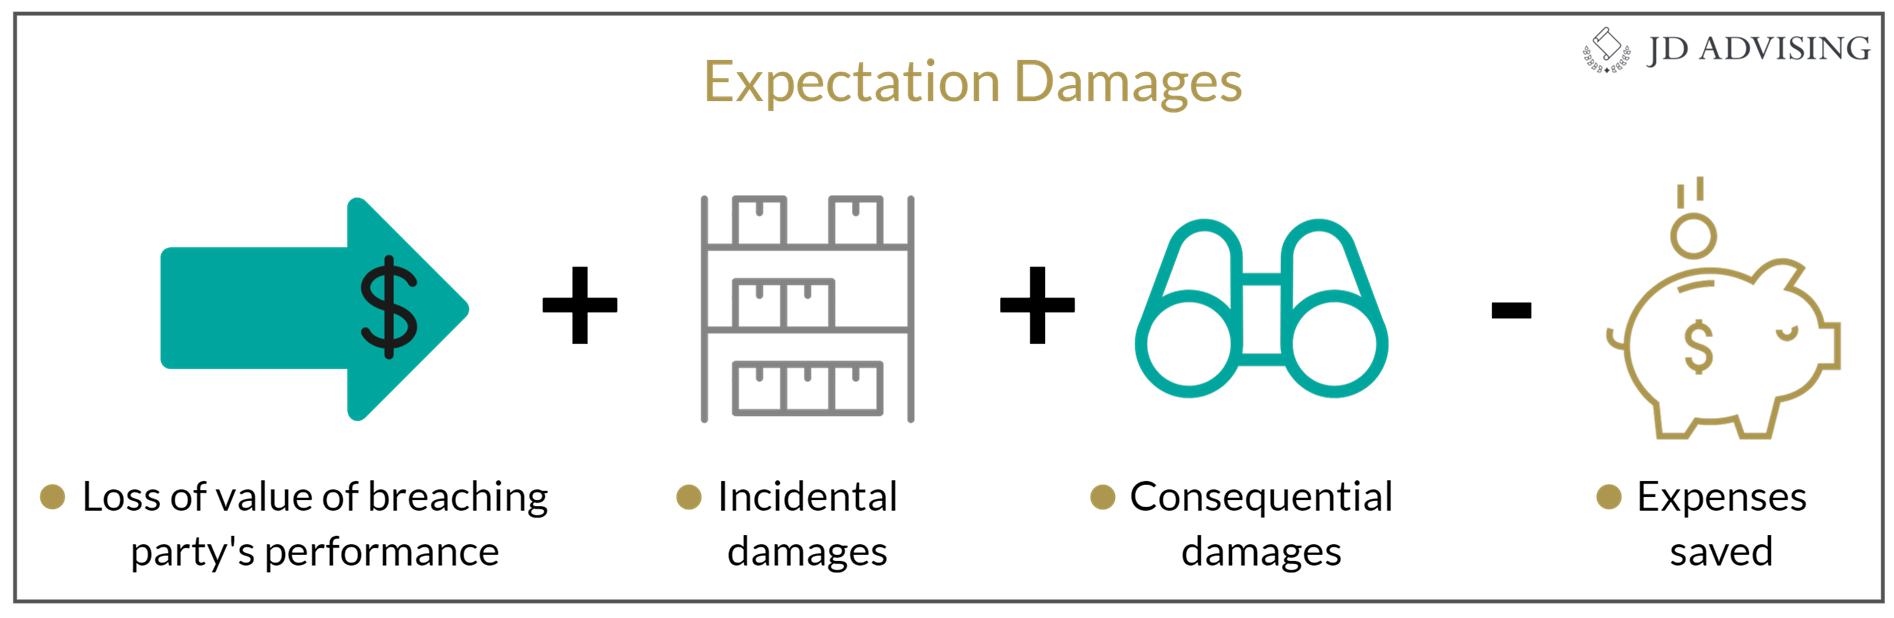 Expectation damages